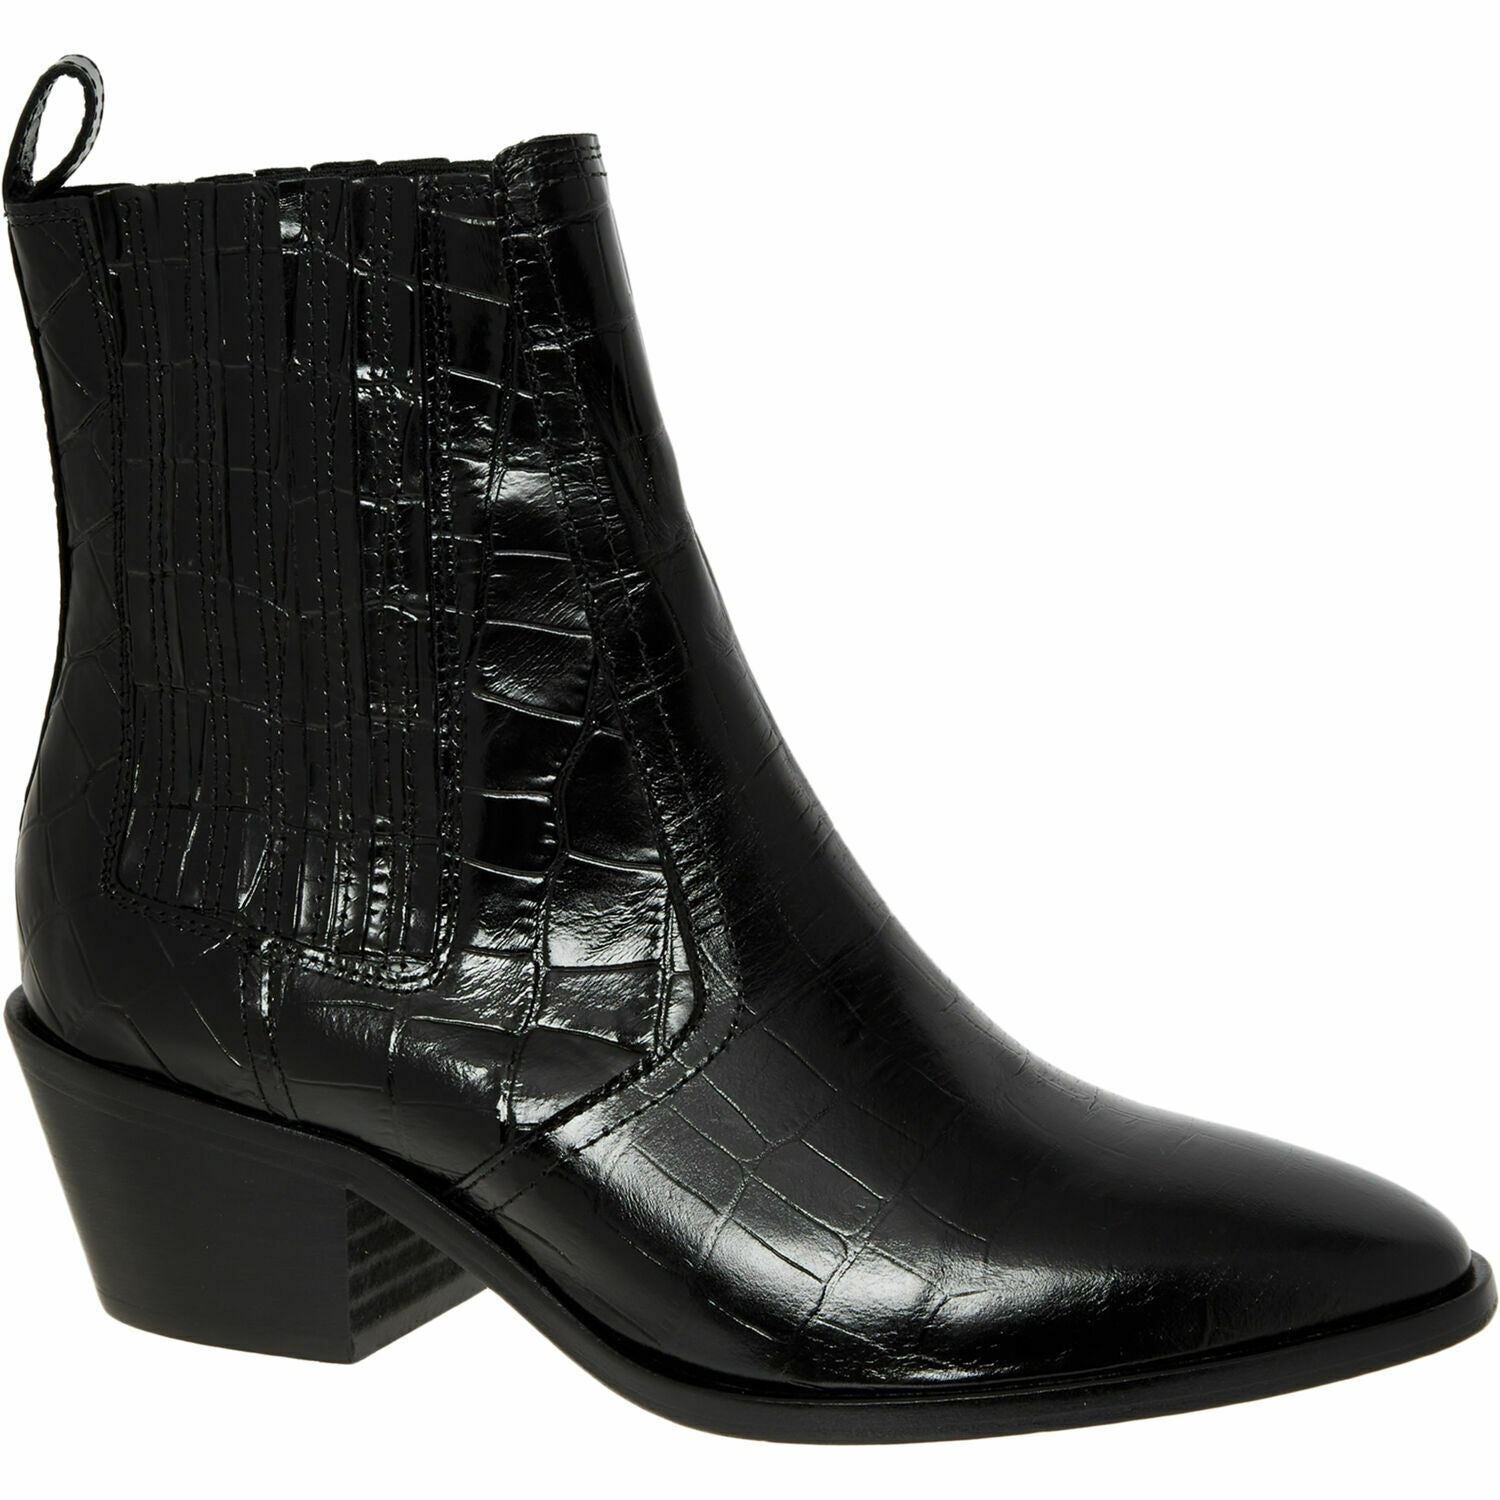 ALLSAINTS Women's MIRIAM CROCO Genuine Leather Boots, Black, UK 4 / EU 37